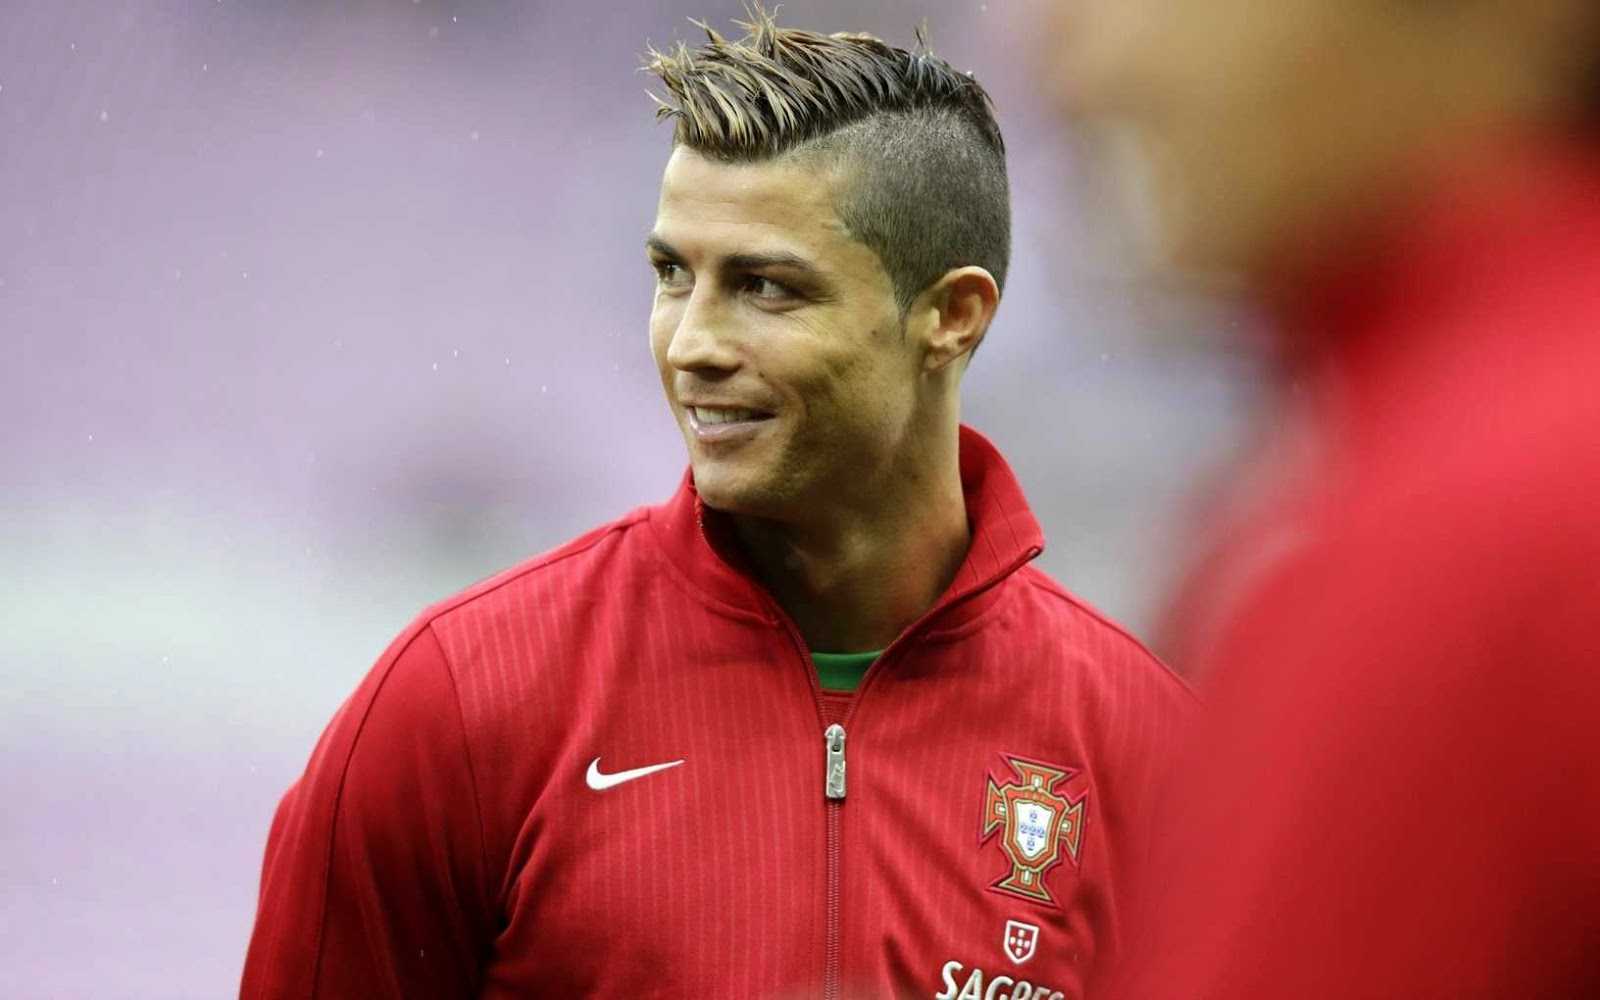 Ronaldo-trendy-hairstyles-for-men